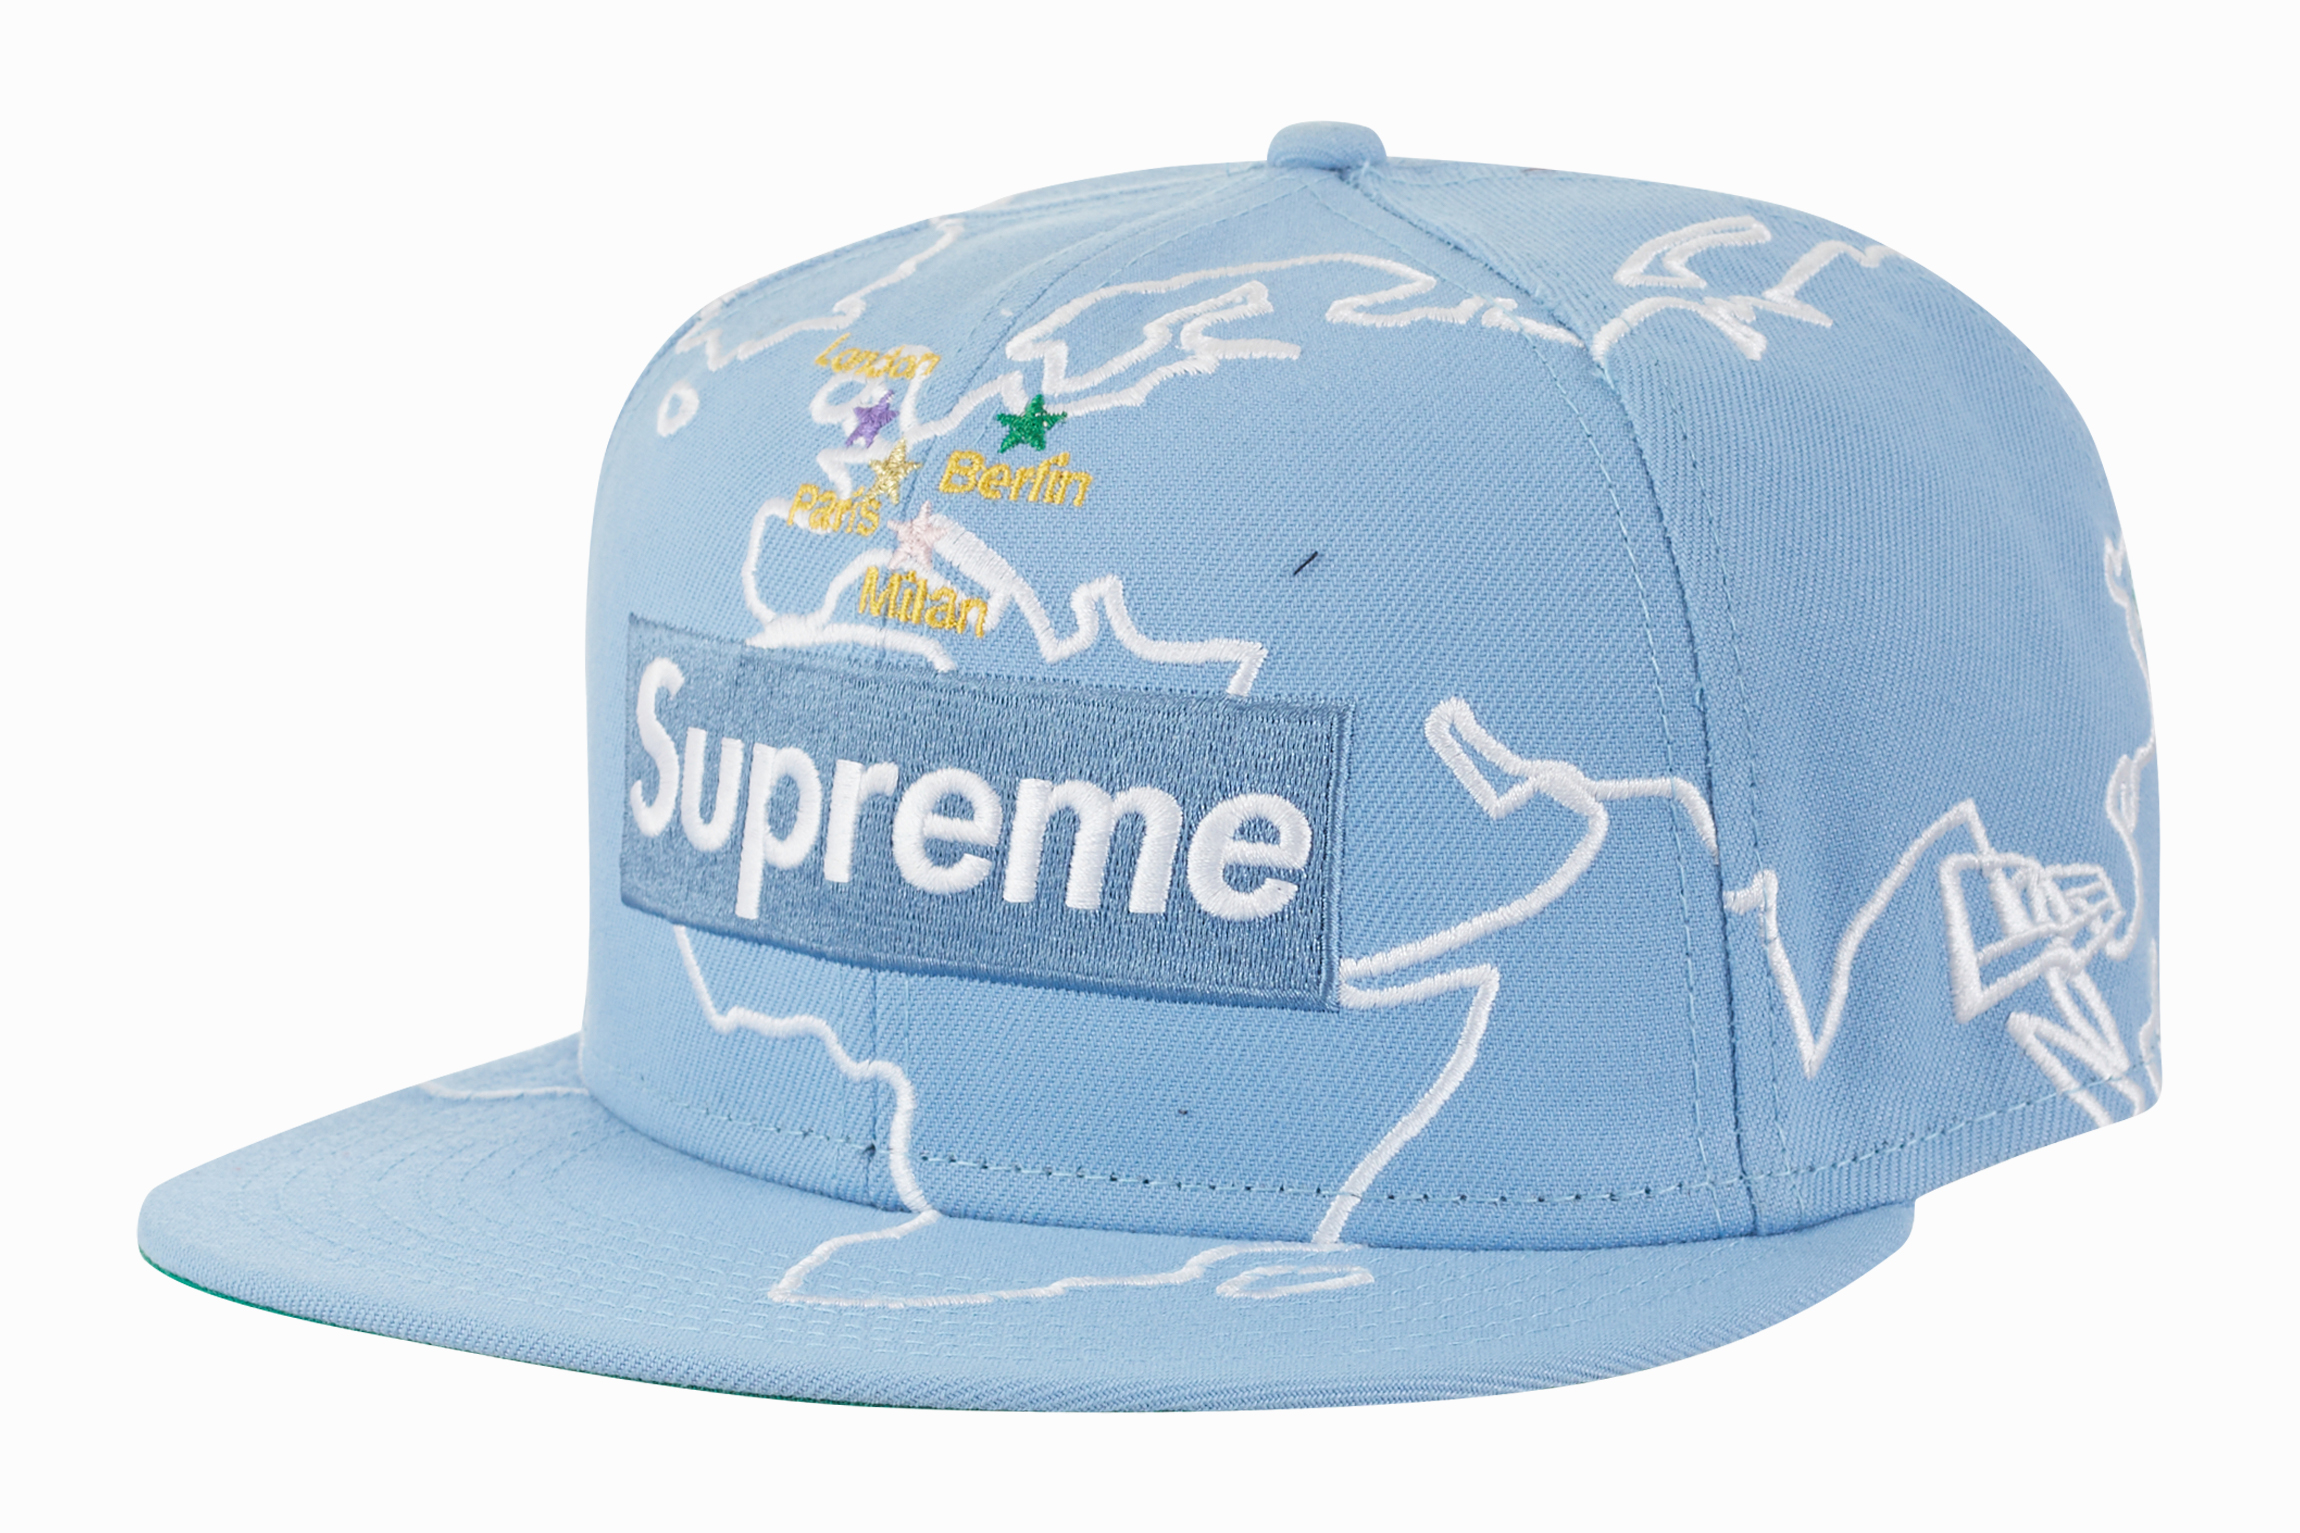 Supreme Worldwide Box Logo New Era Hat Light Blue